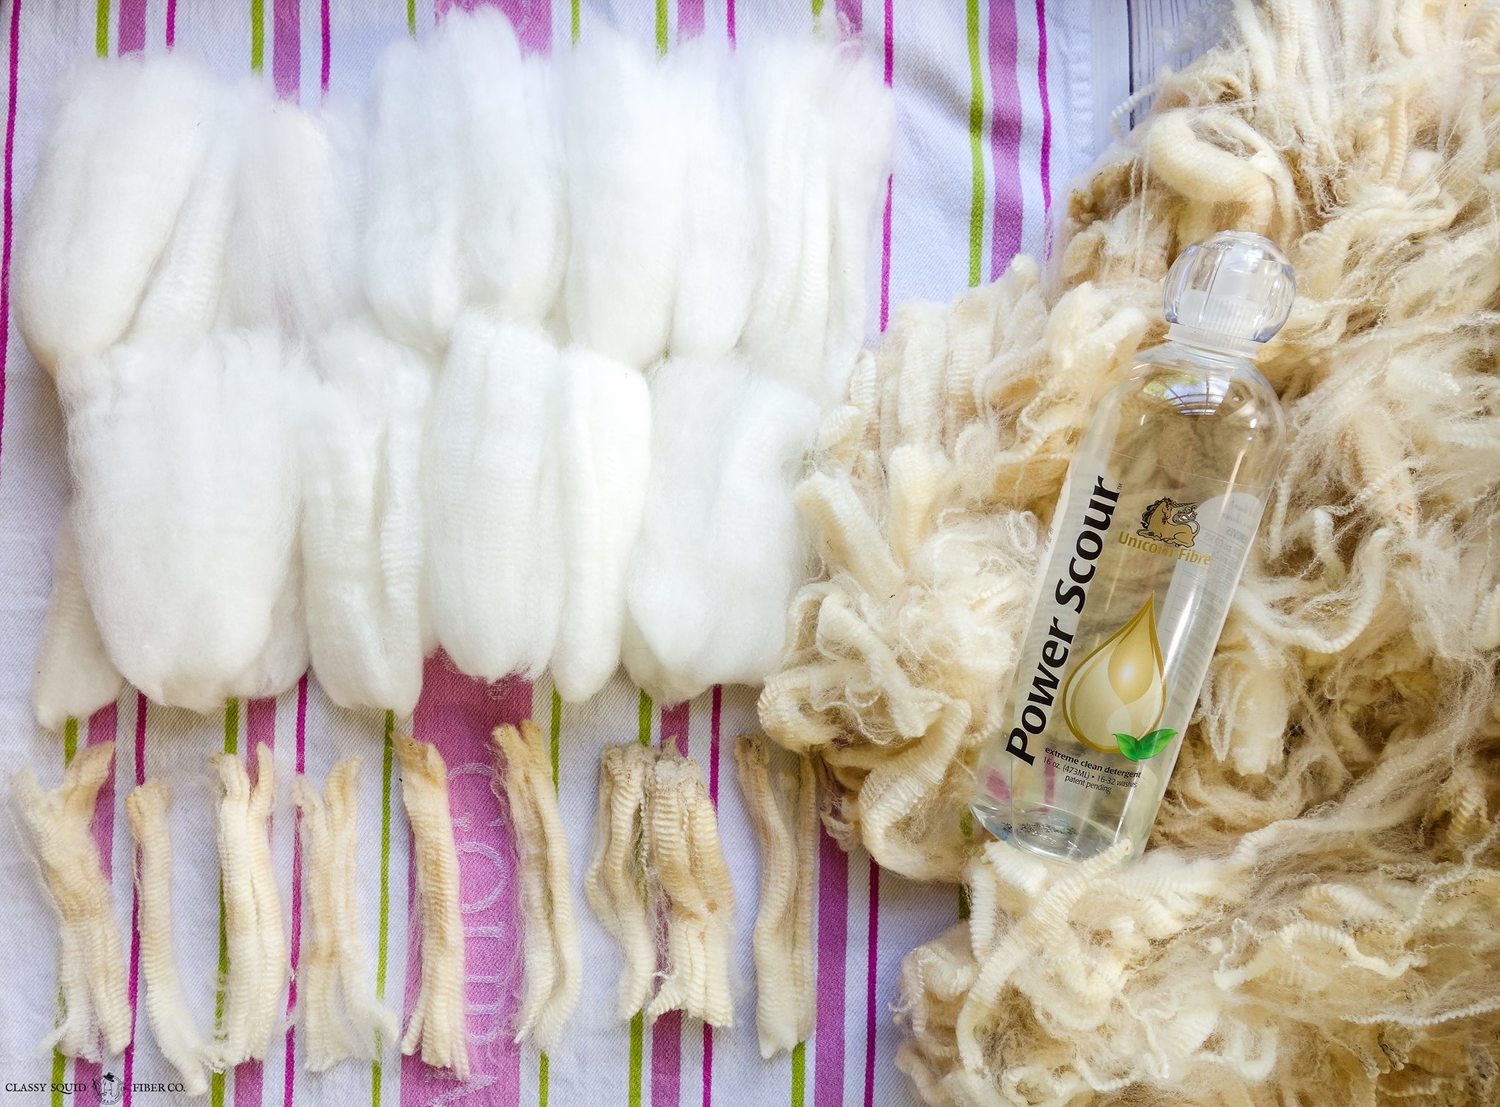 How to Wash Raw Wool Fleece — Unicorn Clean